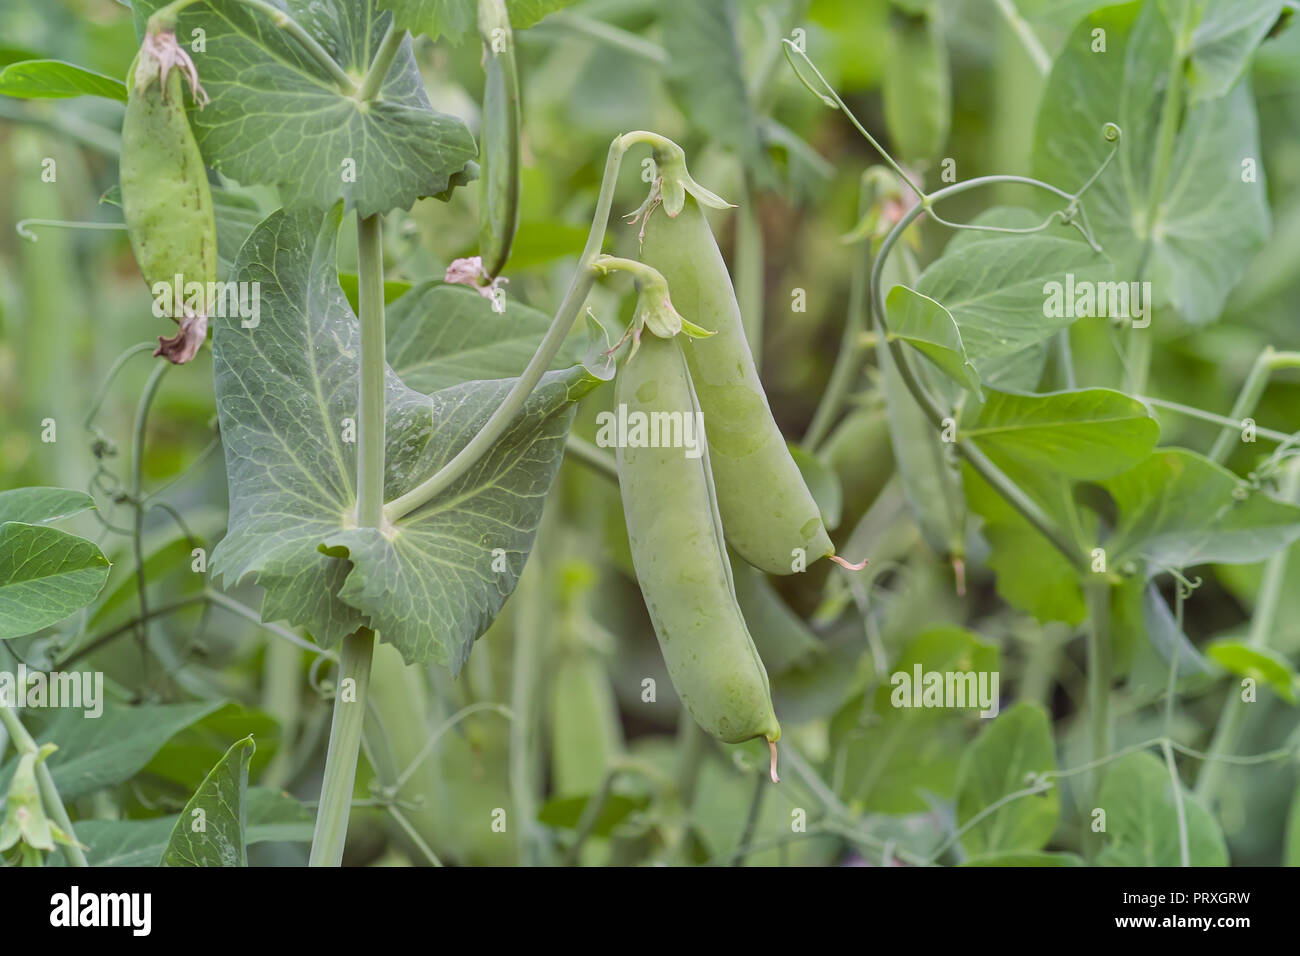 Peas in pods, vegetable patch, Pisum sativum L. convar, Bavaria, Germany, Europe Stock Photo